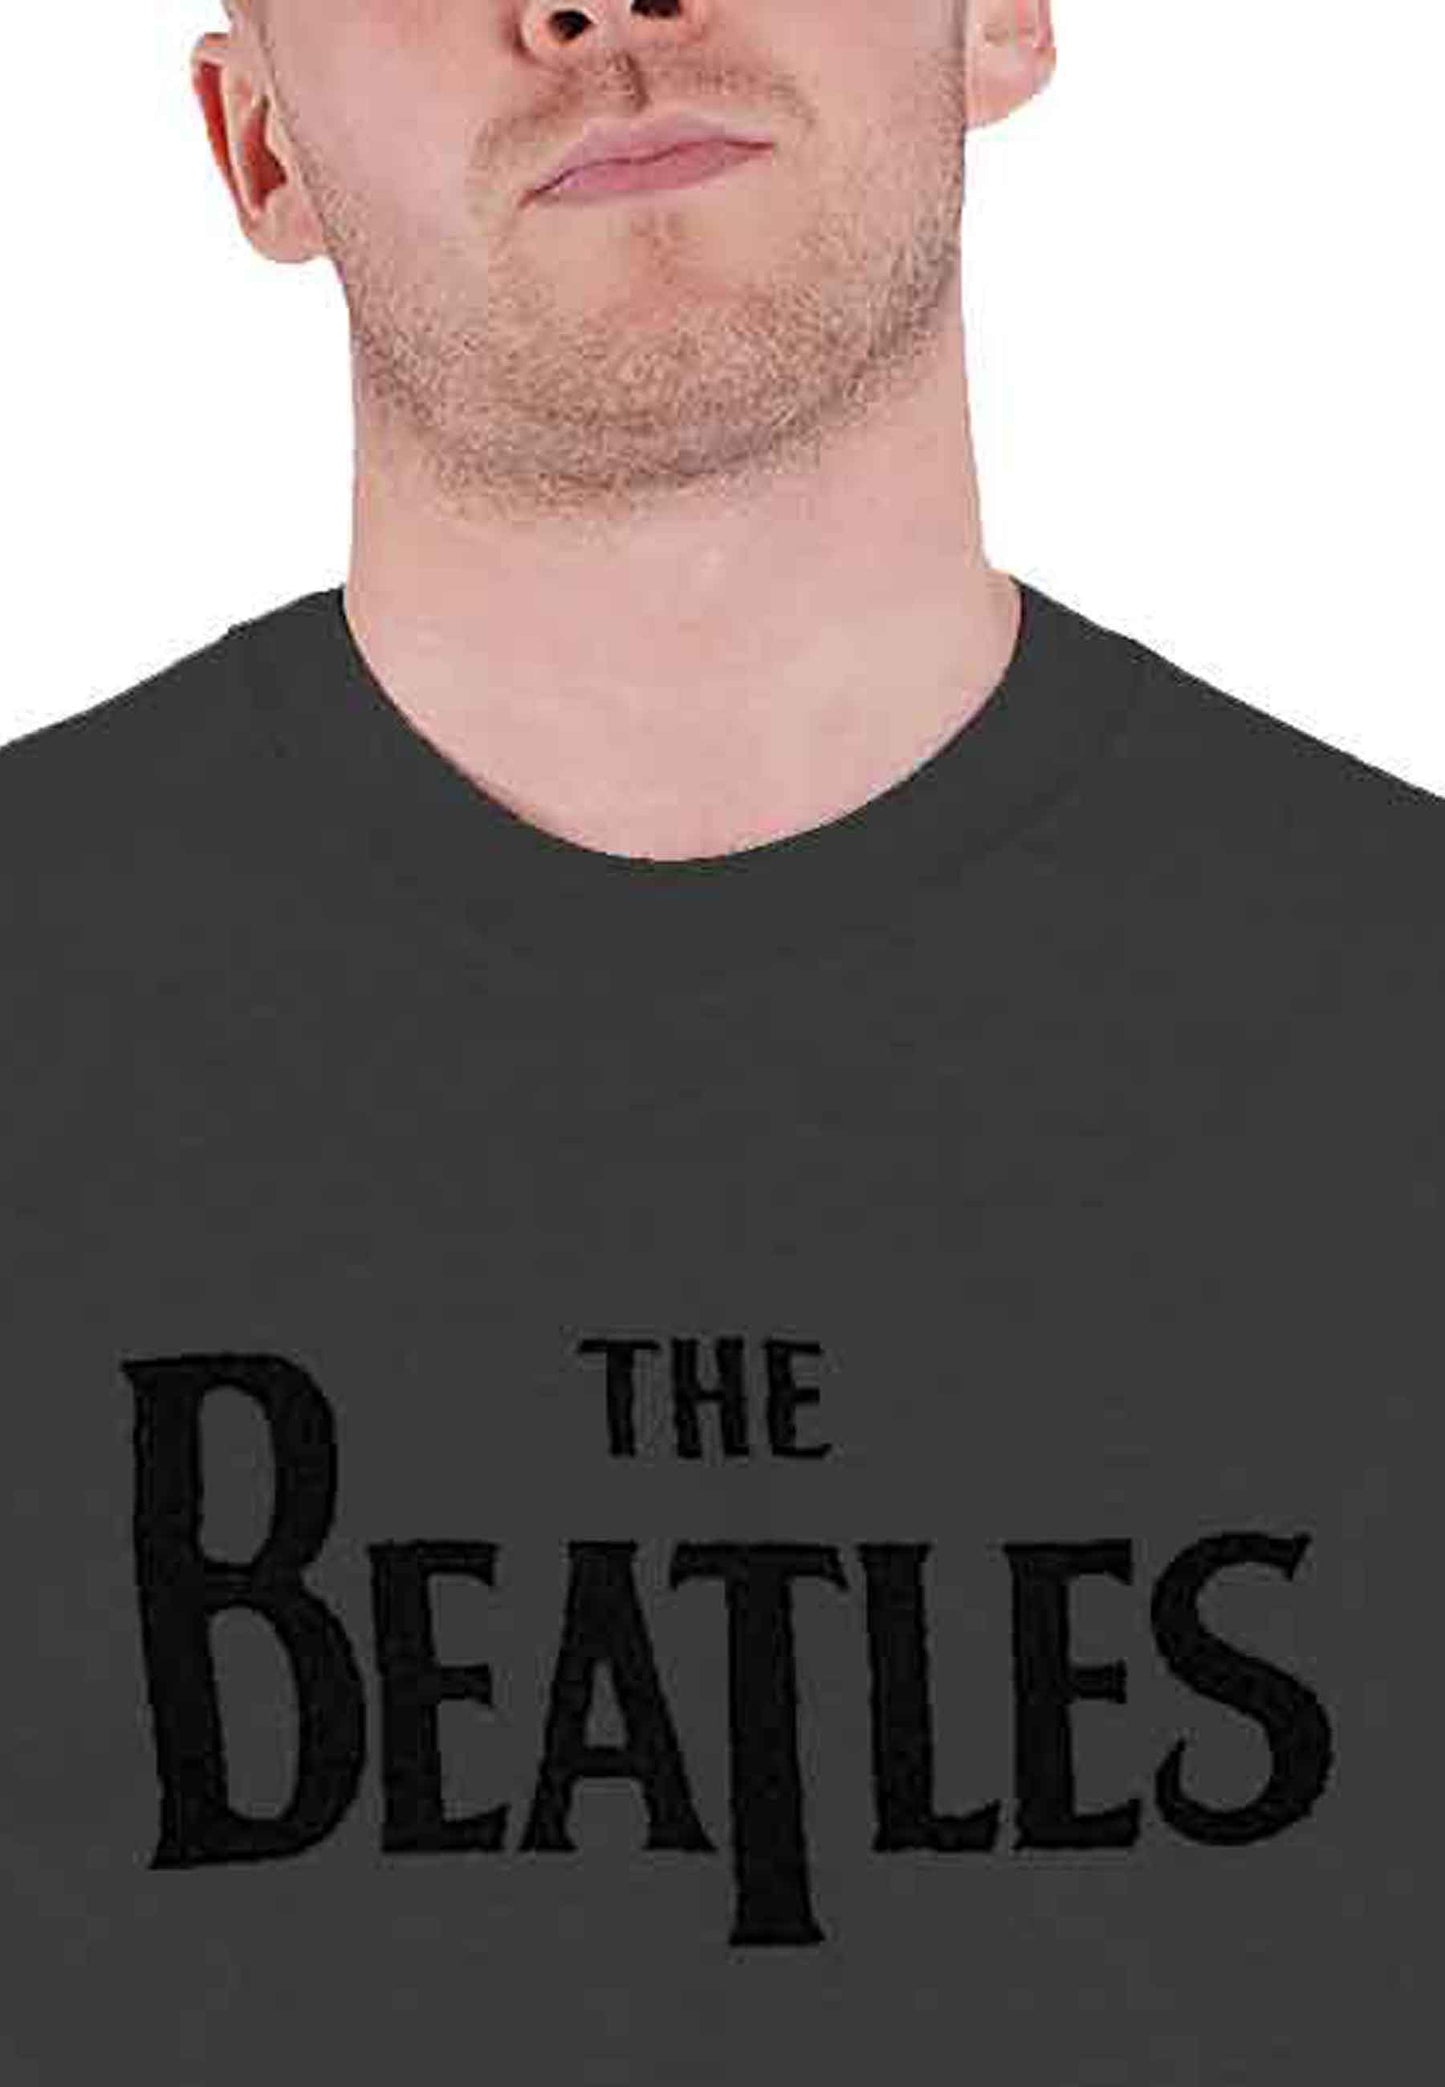 The Beatles Sweatshirt Drop T Band Logo new Official Unisex Grey